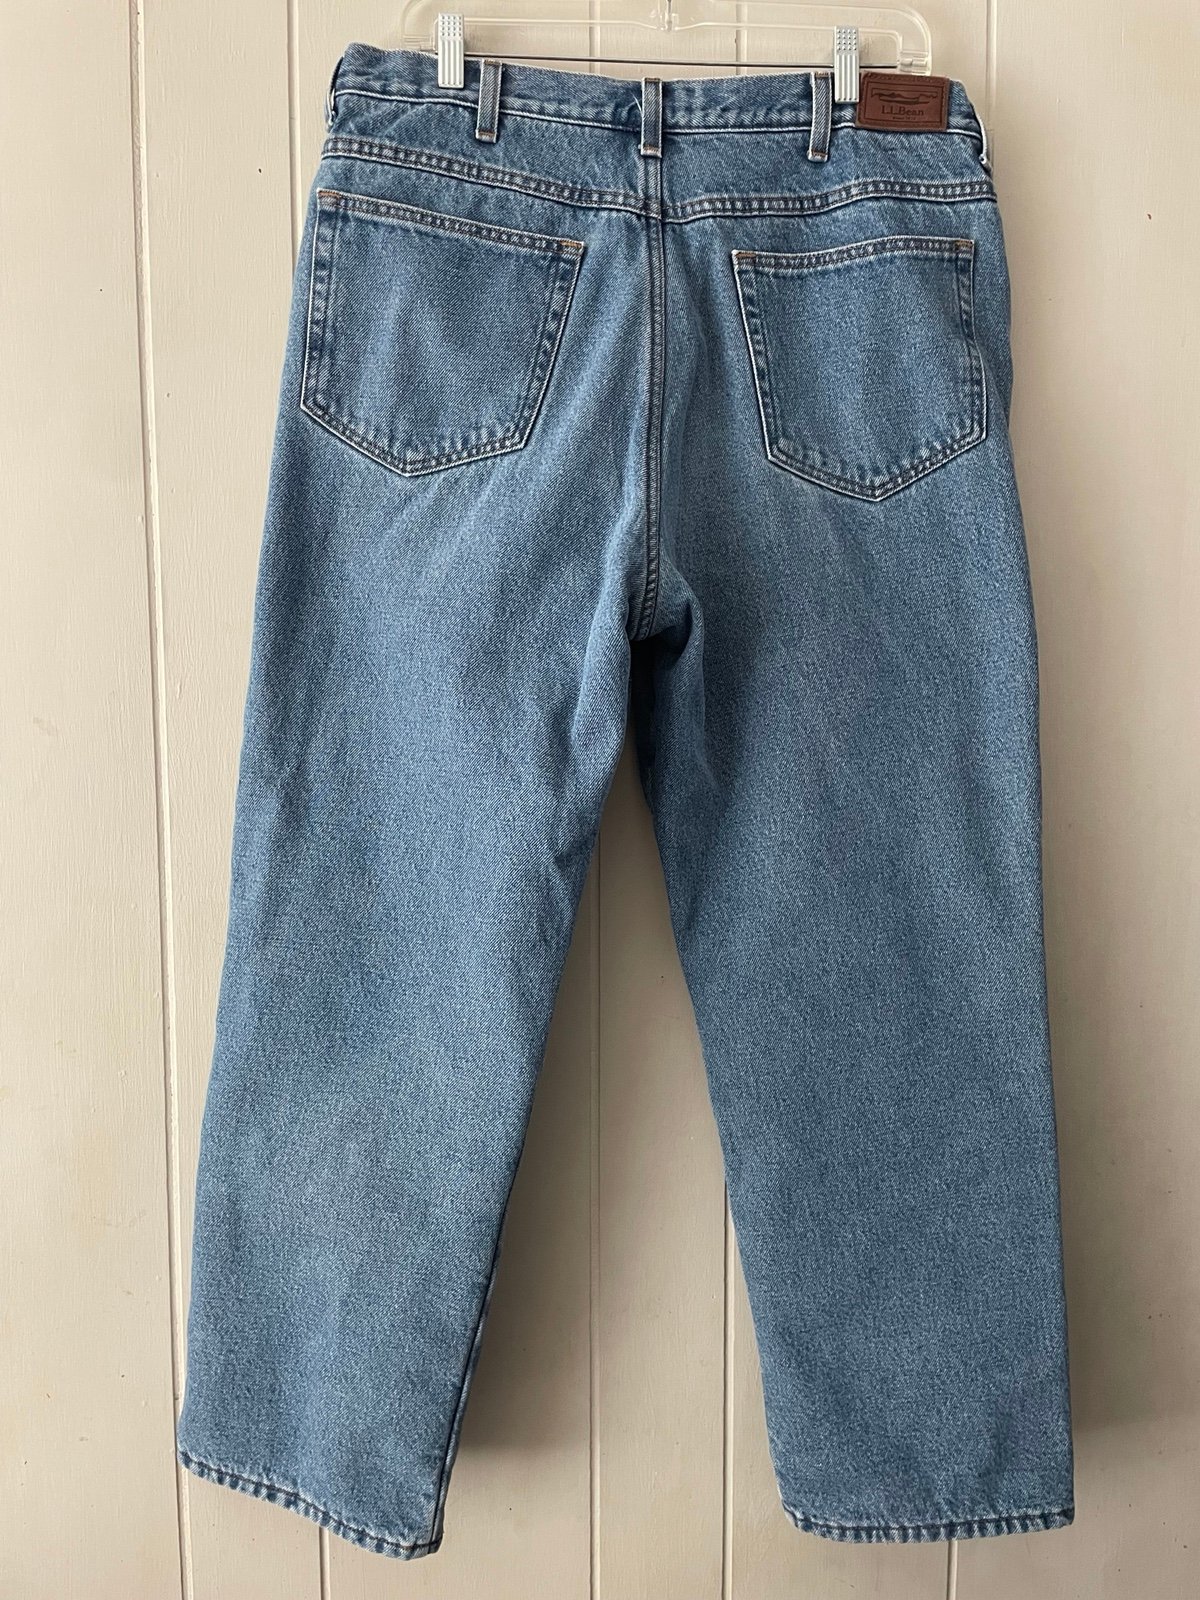 Elegant Vintage Classic Fit L.L. Bean Fleece Lined Jeans kuJSToLZ4 Counter Genuine 